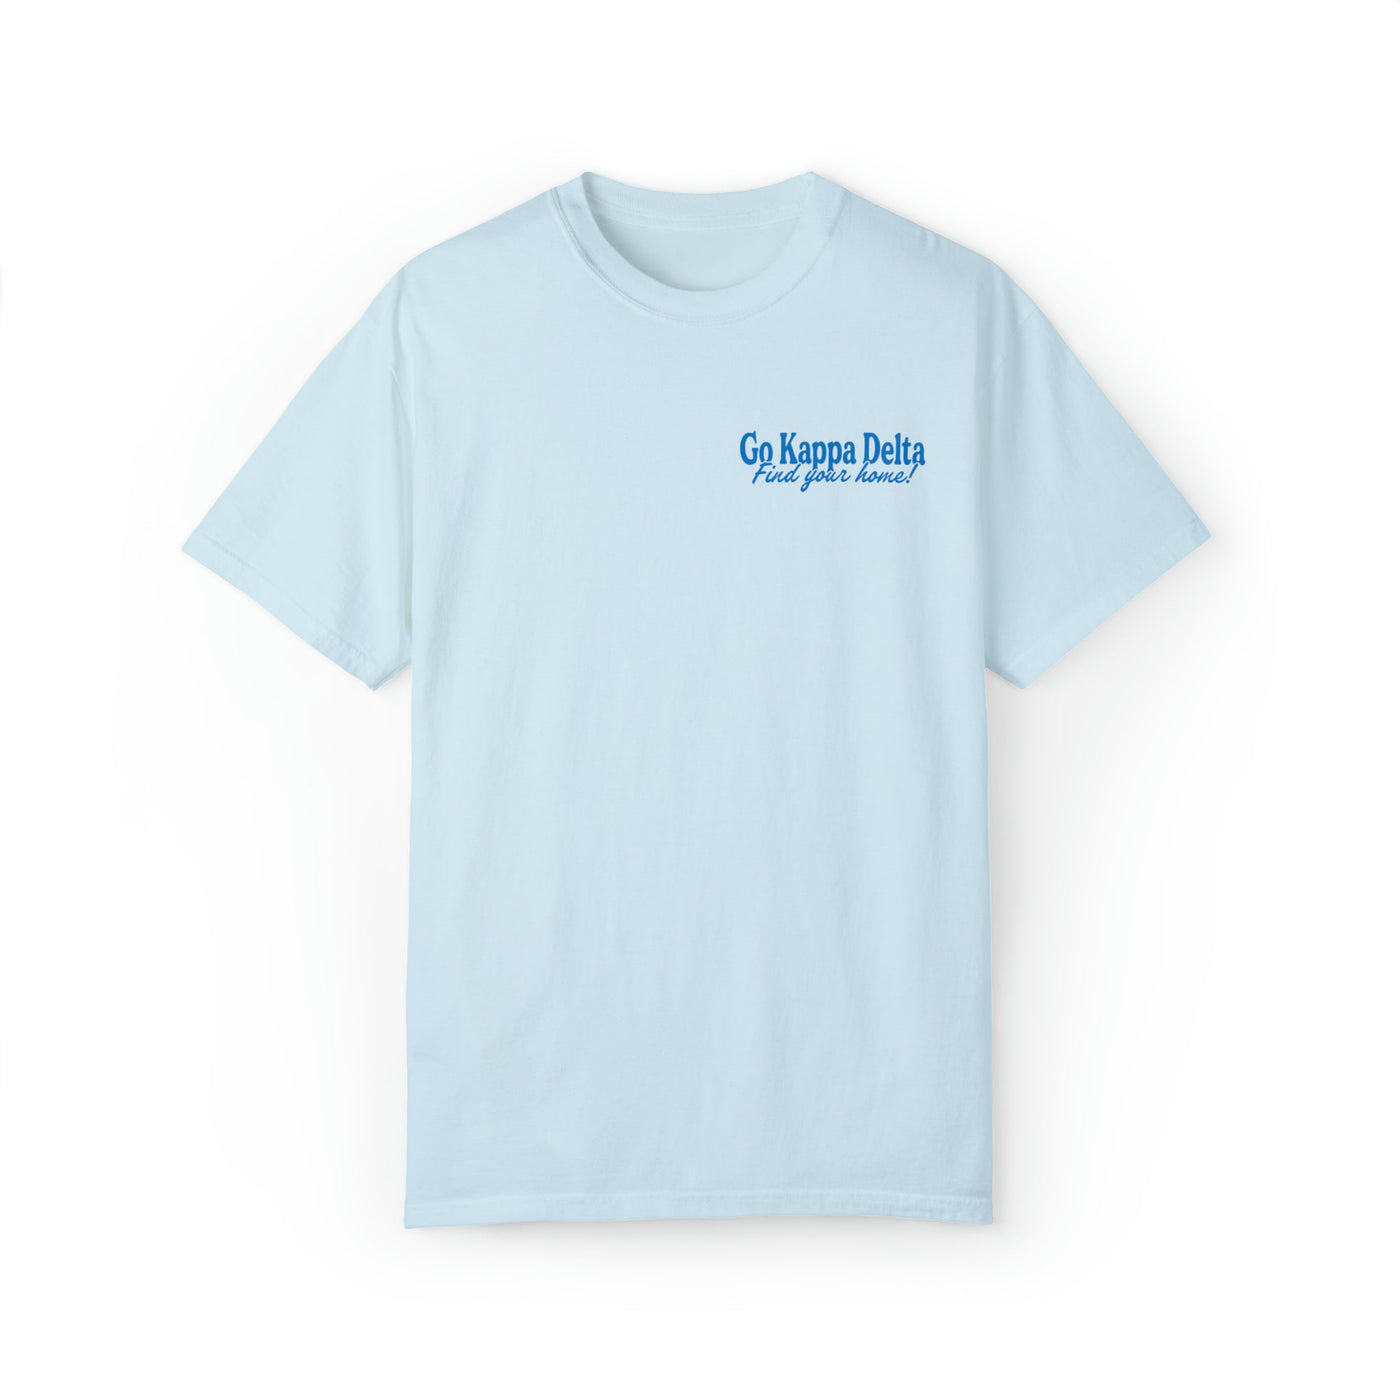 Kappa Delta Teddy Bear Sorority T-shirt